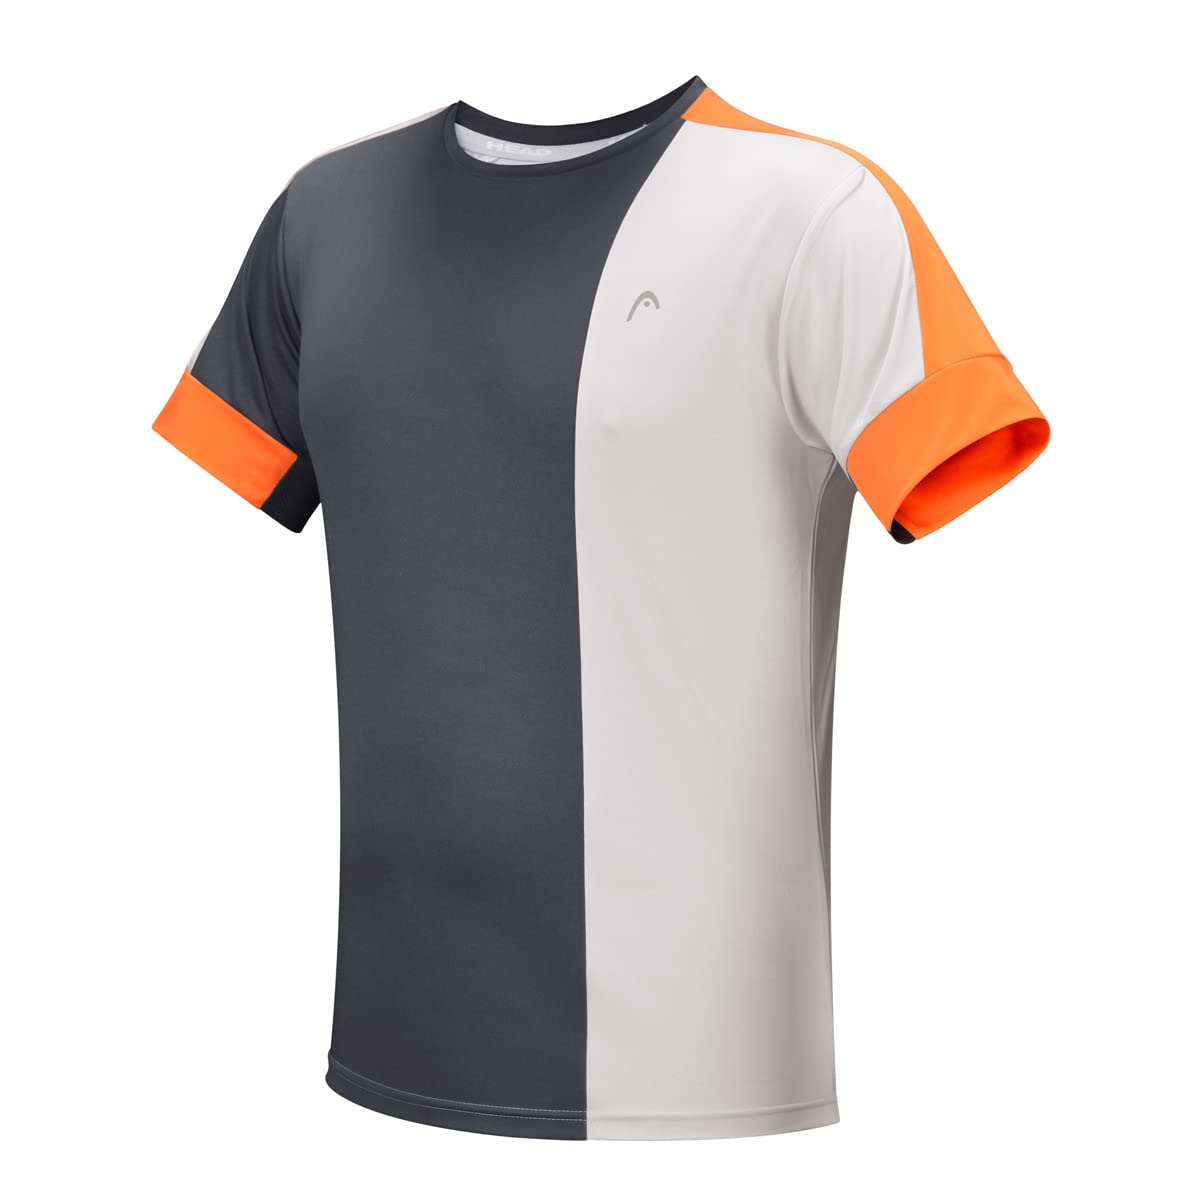 Head HCD-363 T-Shirt, Charcoal/Lt. Grey/Orange - Best Price online Prokicksports.com